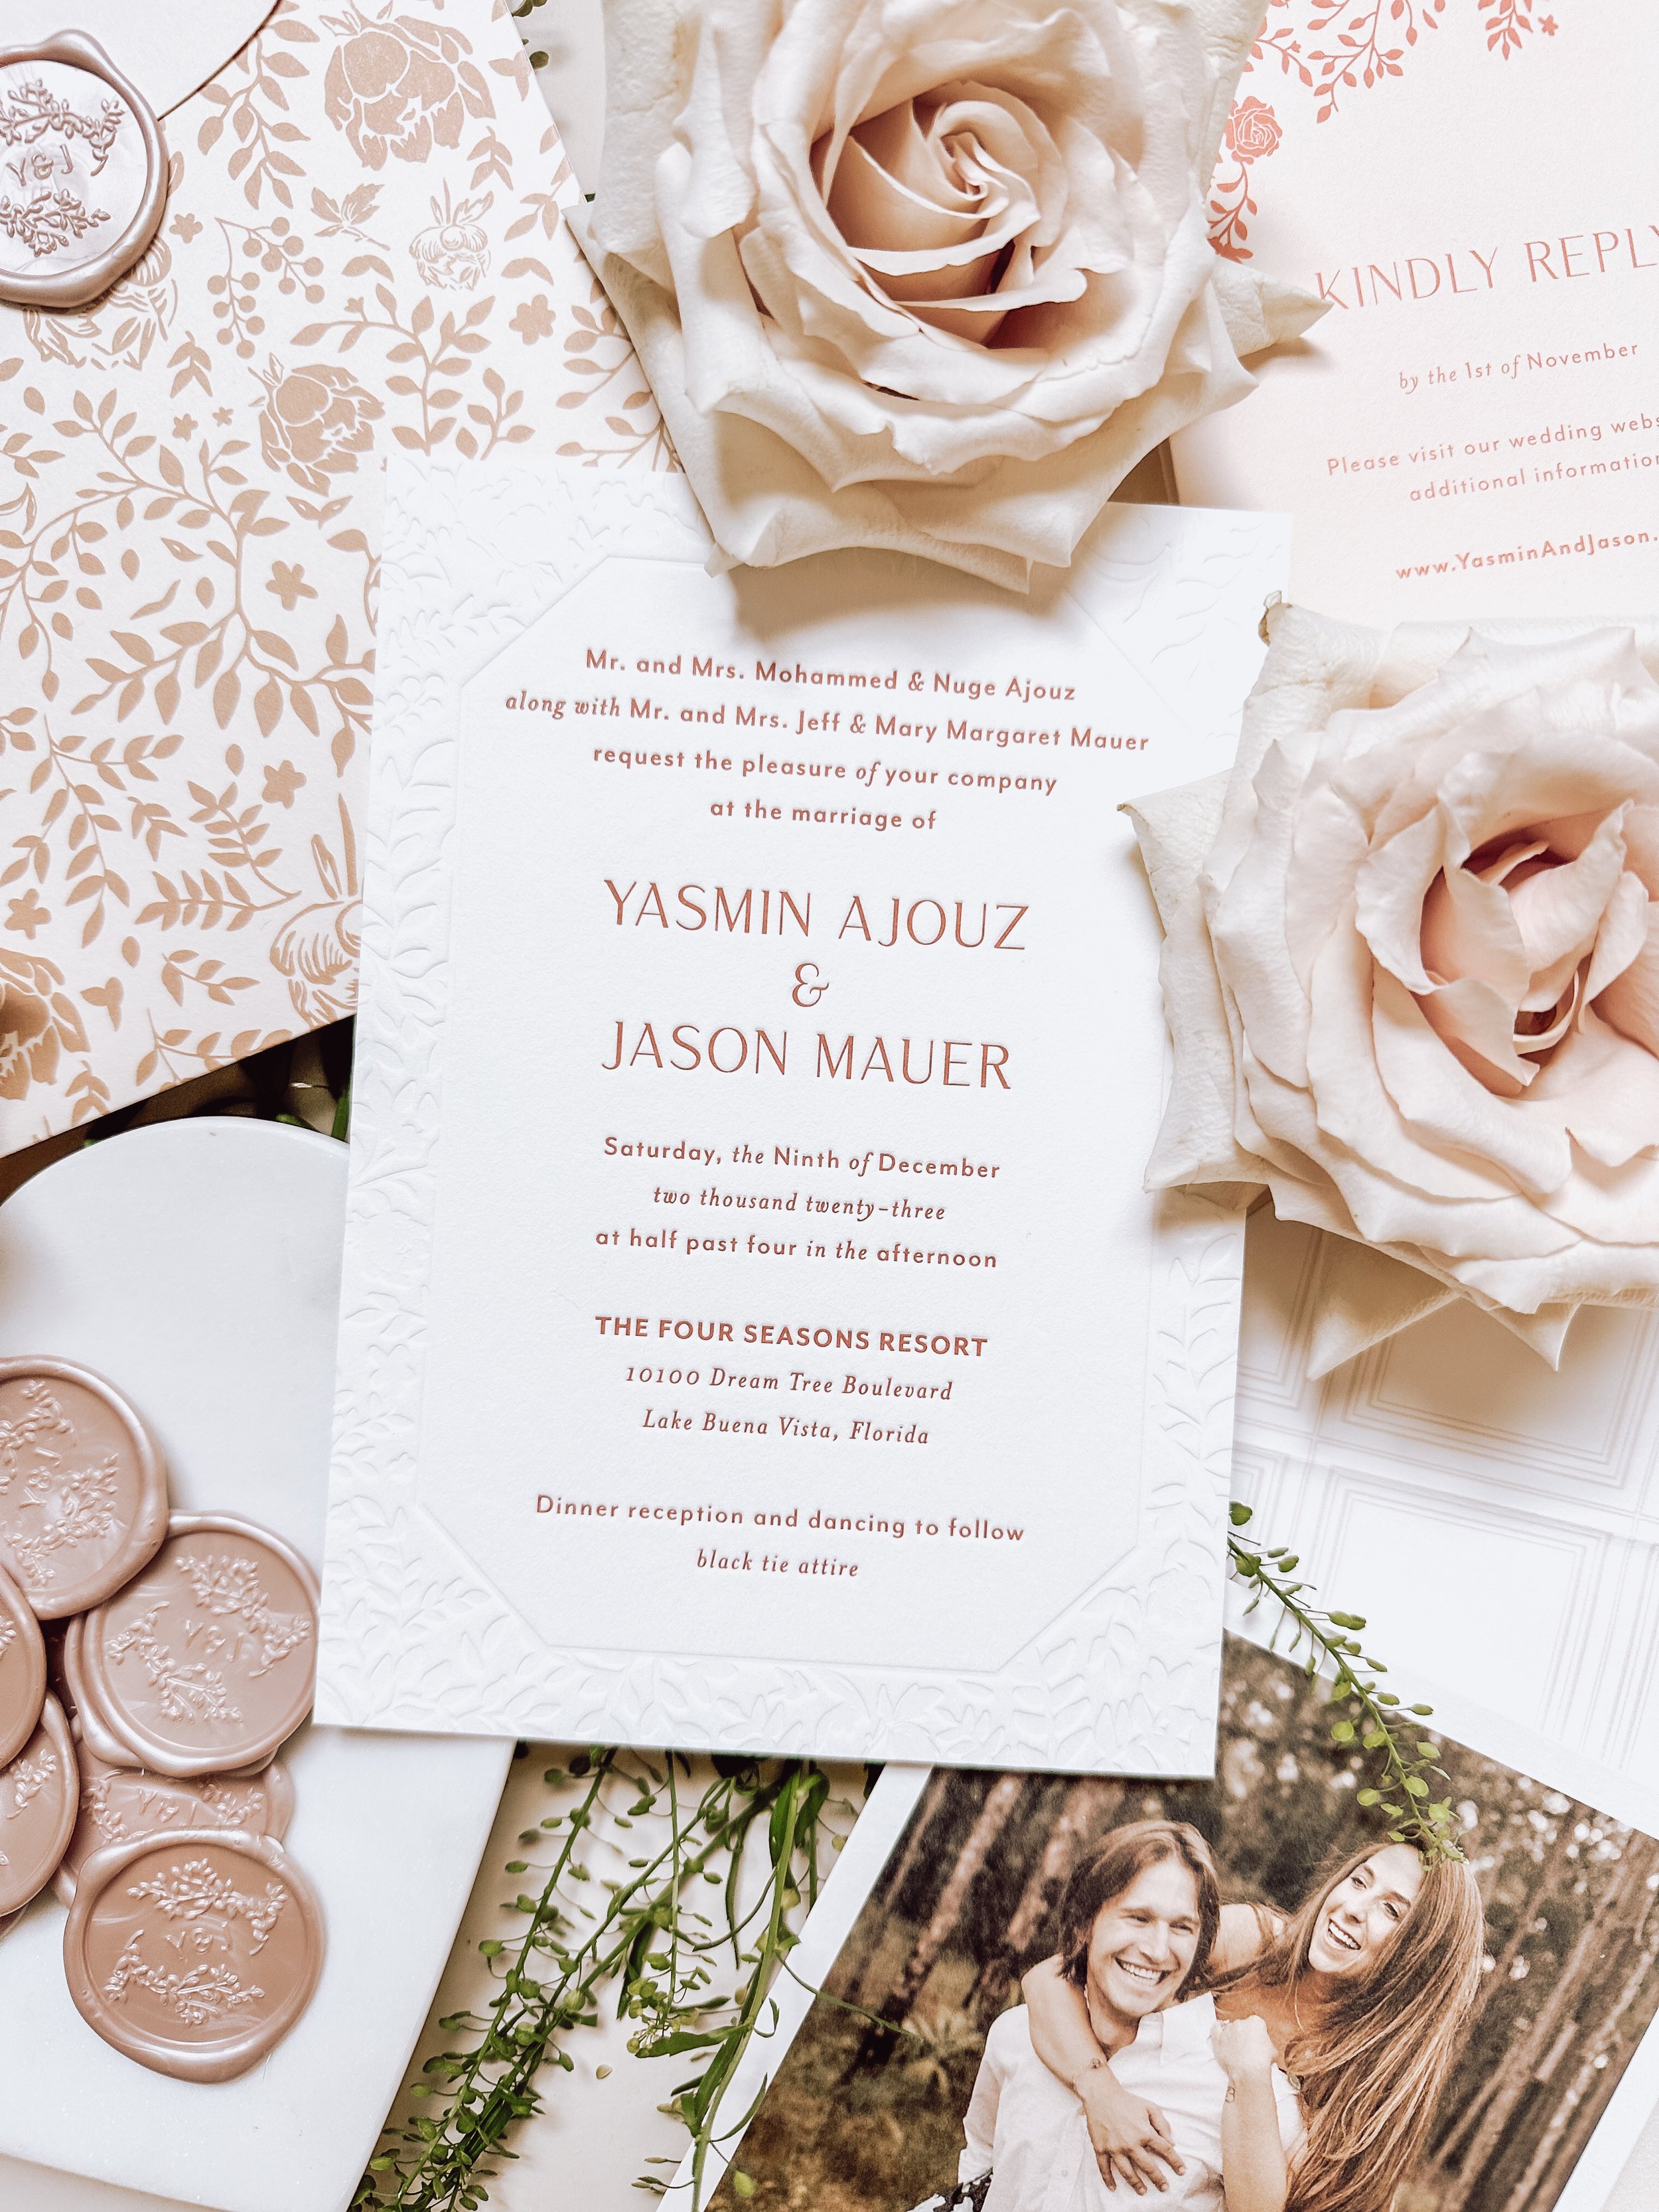 Yasmin-jason-letterpress-invitation-flatlay